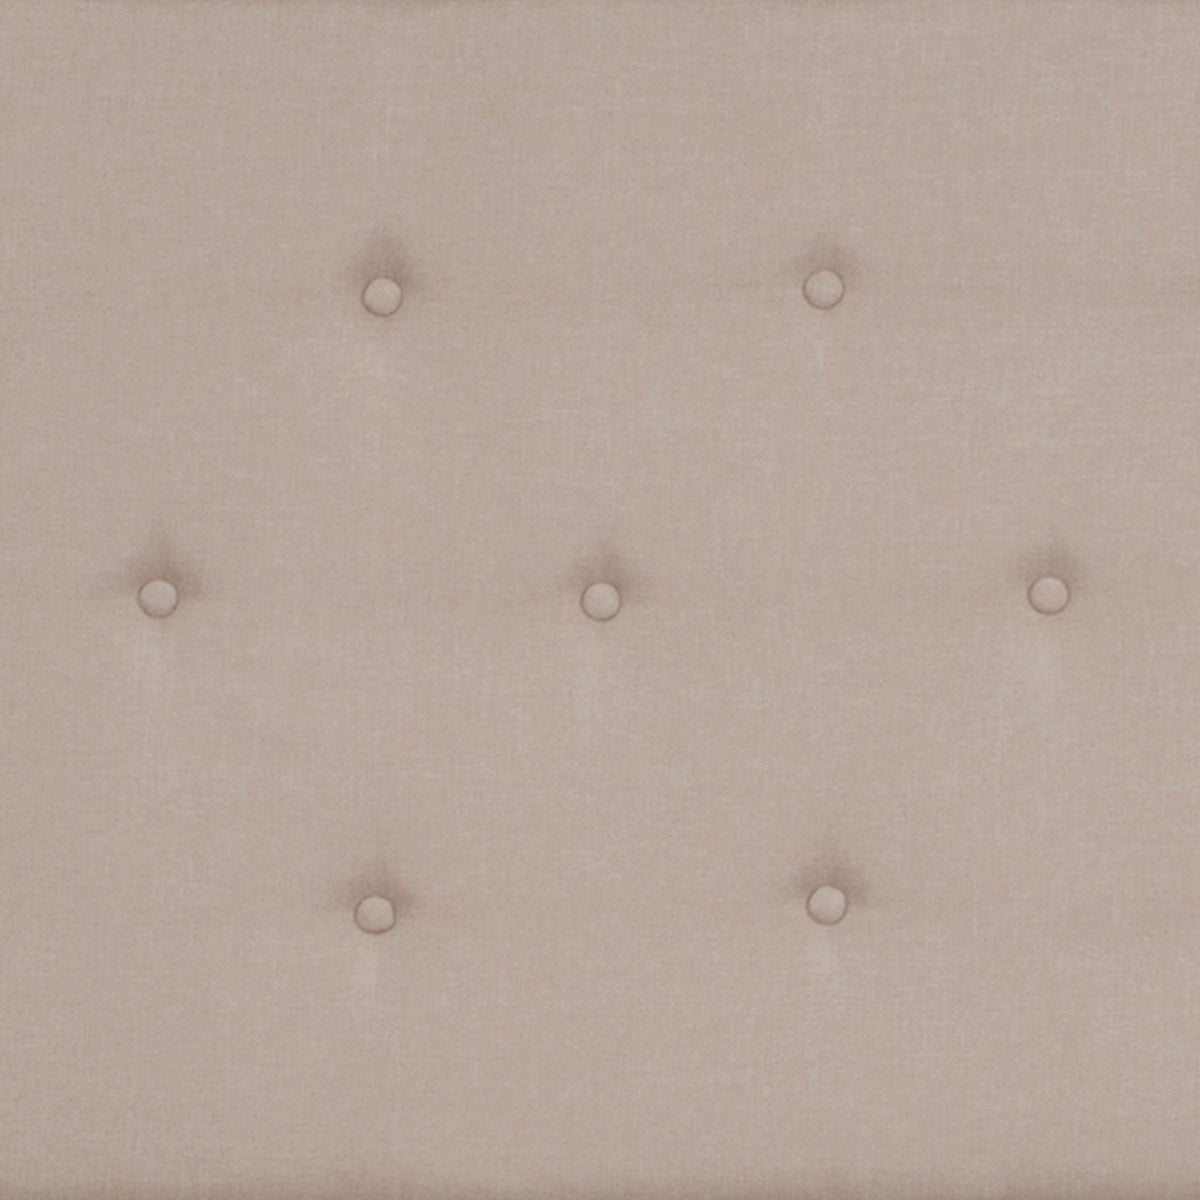 Beige,Full |#| Full Size Panel Tufted Upholstered Platform Bed in Beige Fabric